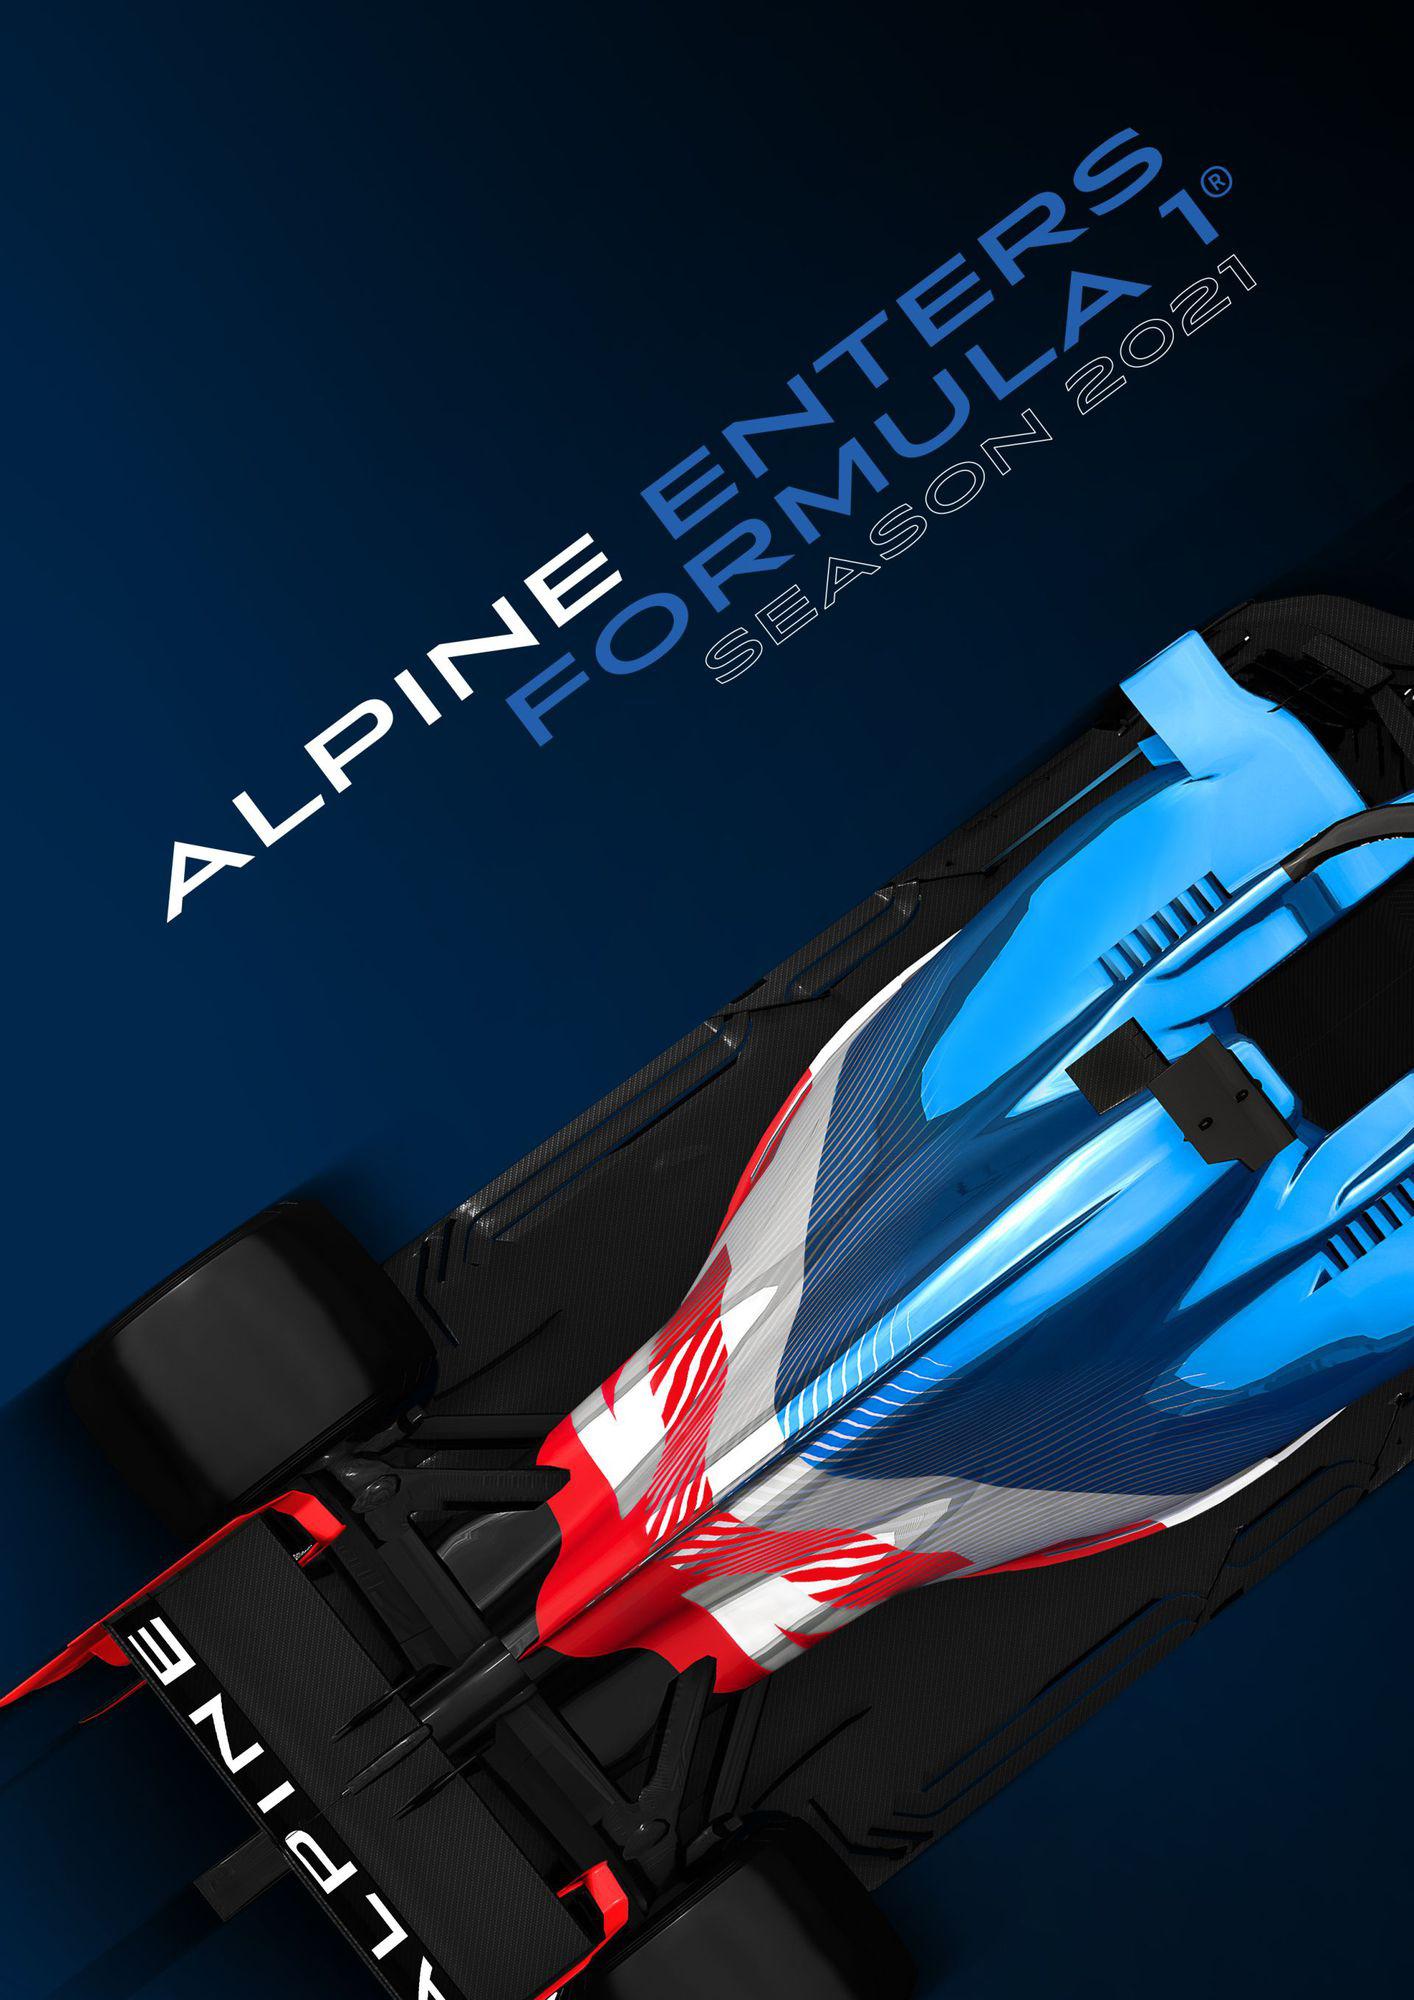 Din sezonul 2021 echipa Renault devine Alpine F1 Team